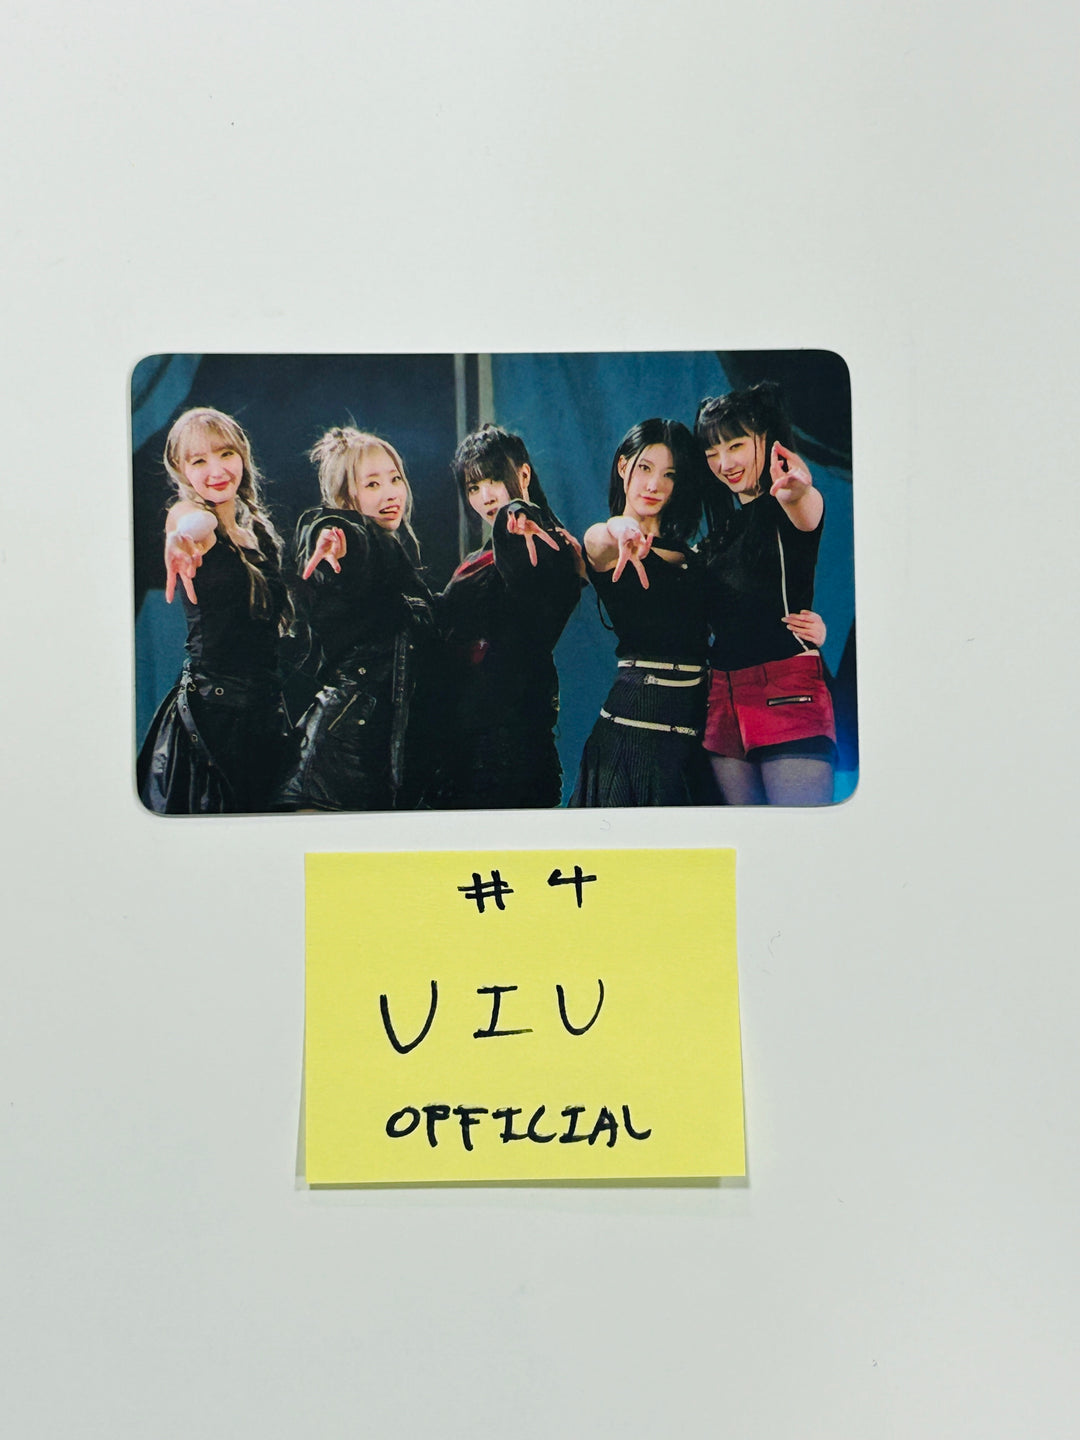 ViV "Bomb" Debut 1st EP - Official Photocard [24.5.10]